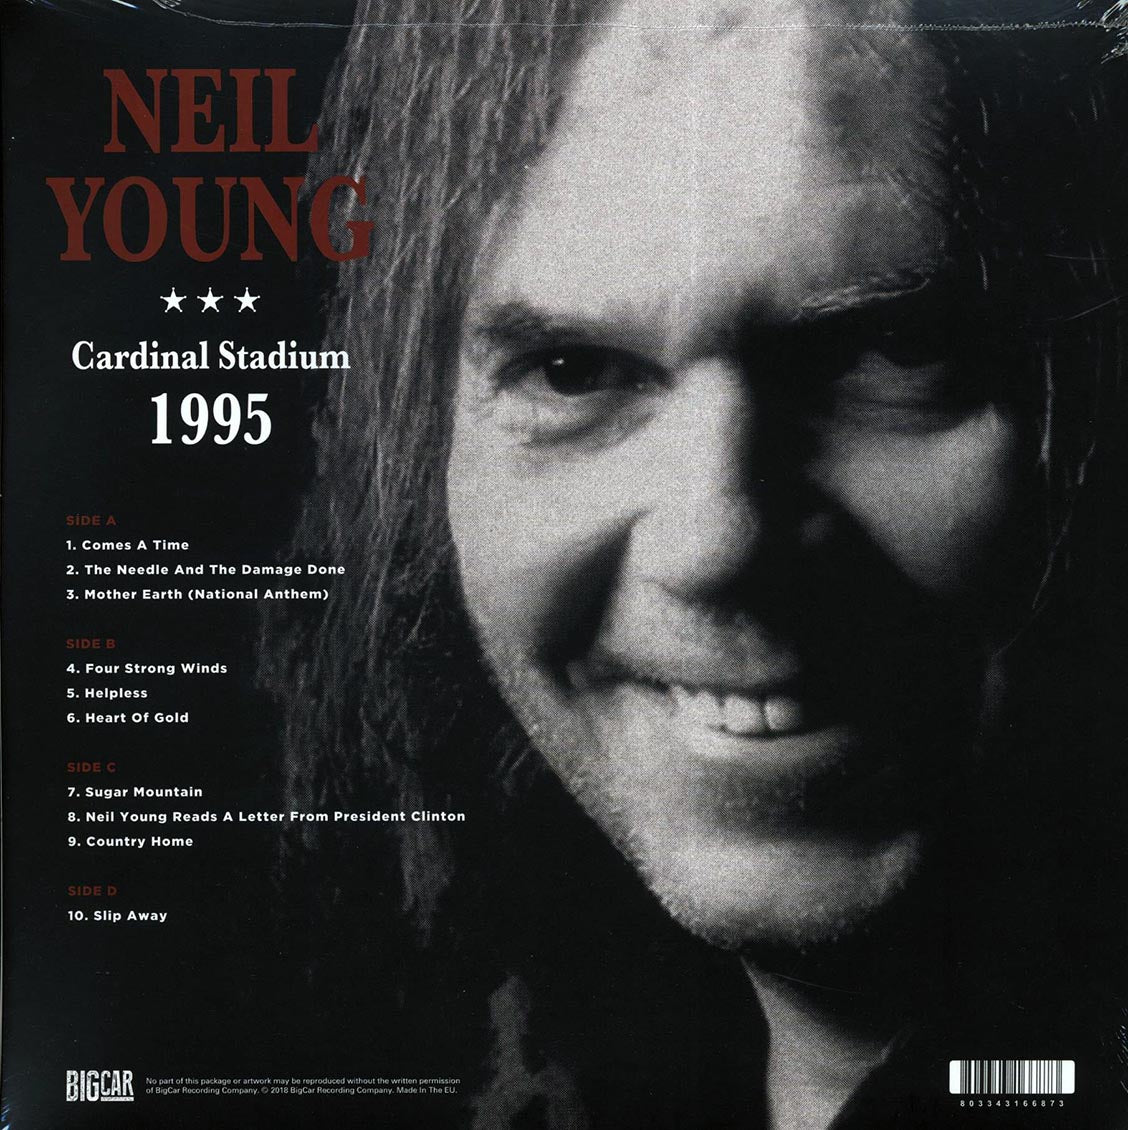 Neil Young - Cardinal Stadium 1995 (2xLP) - Vinyl LP, LP